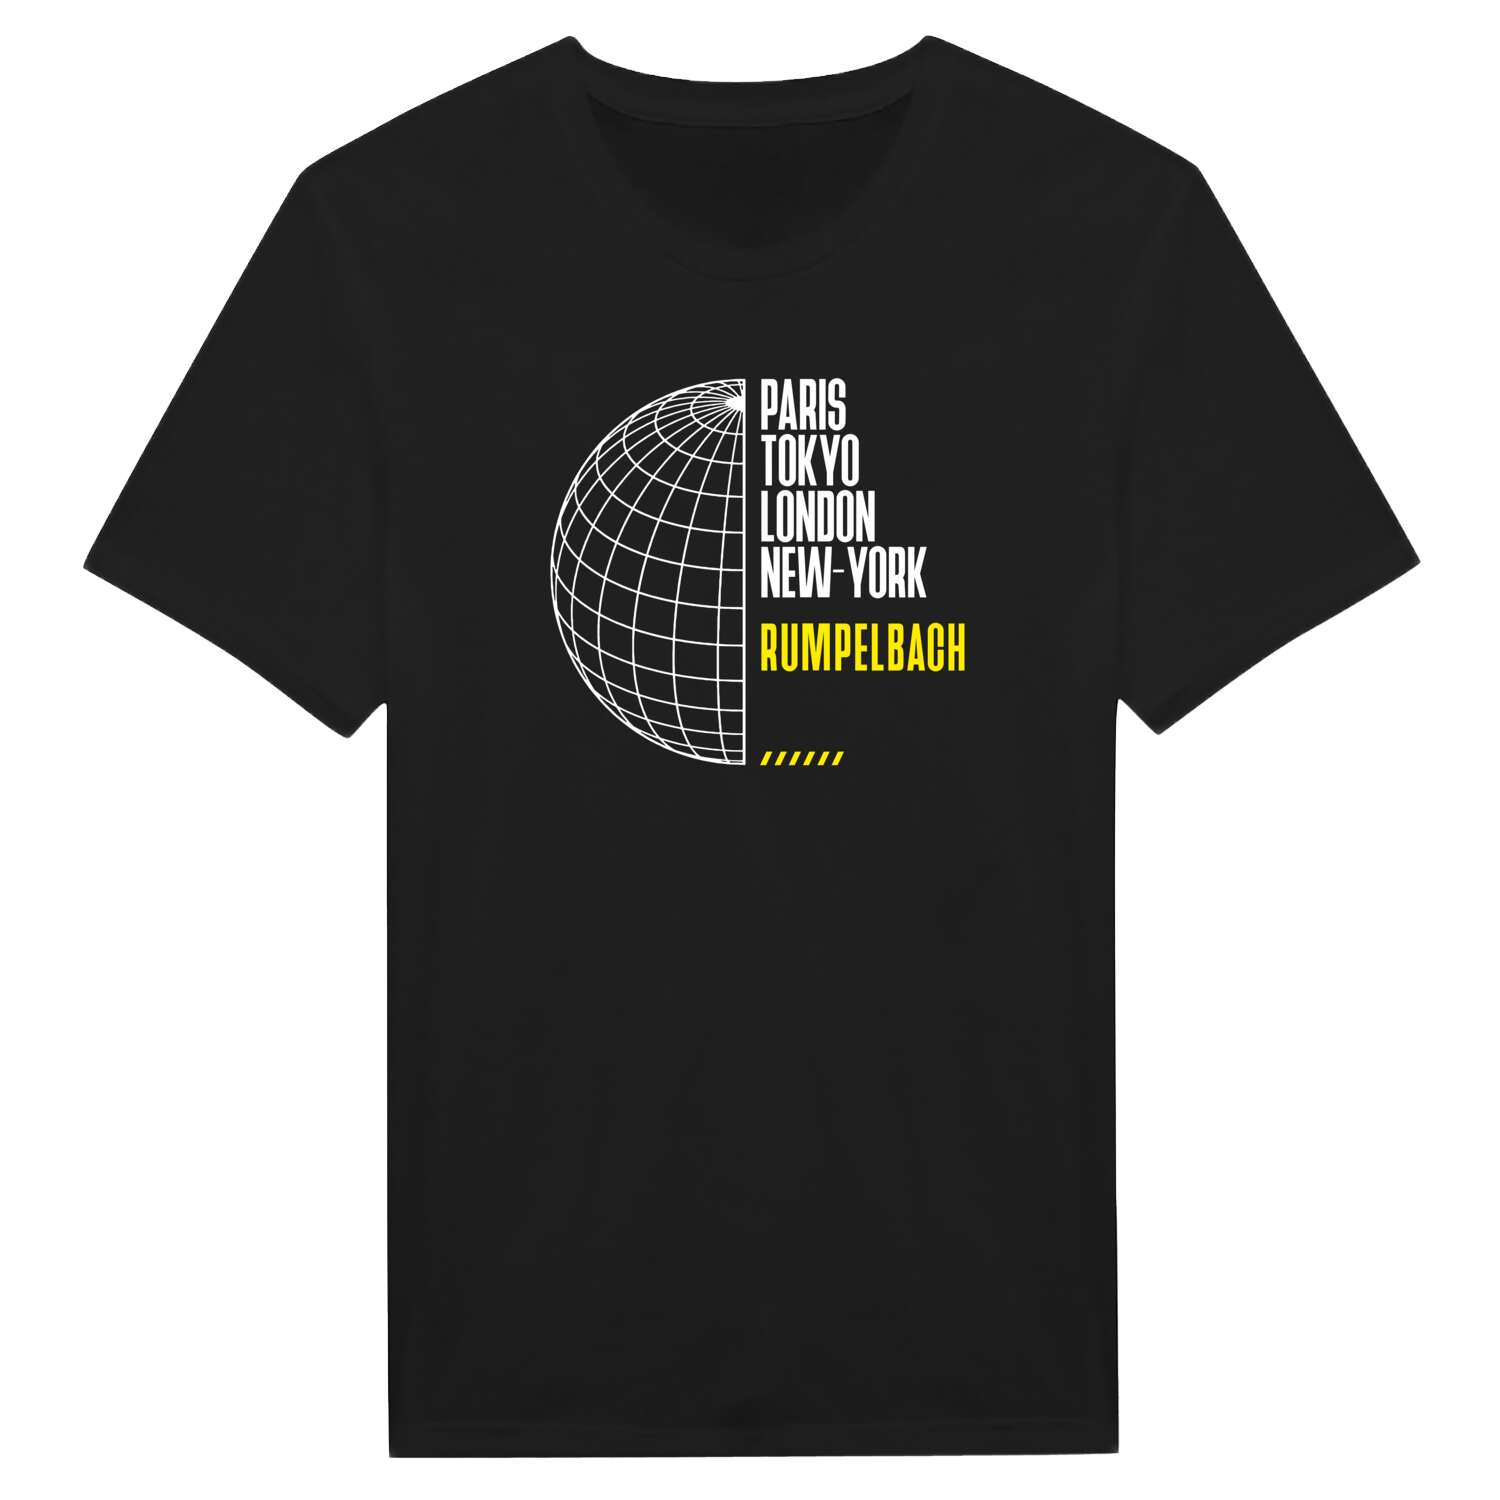 Rumpelbach T-Shirt »Paris Tokyo London«